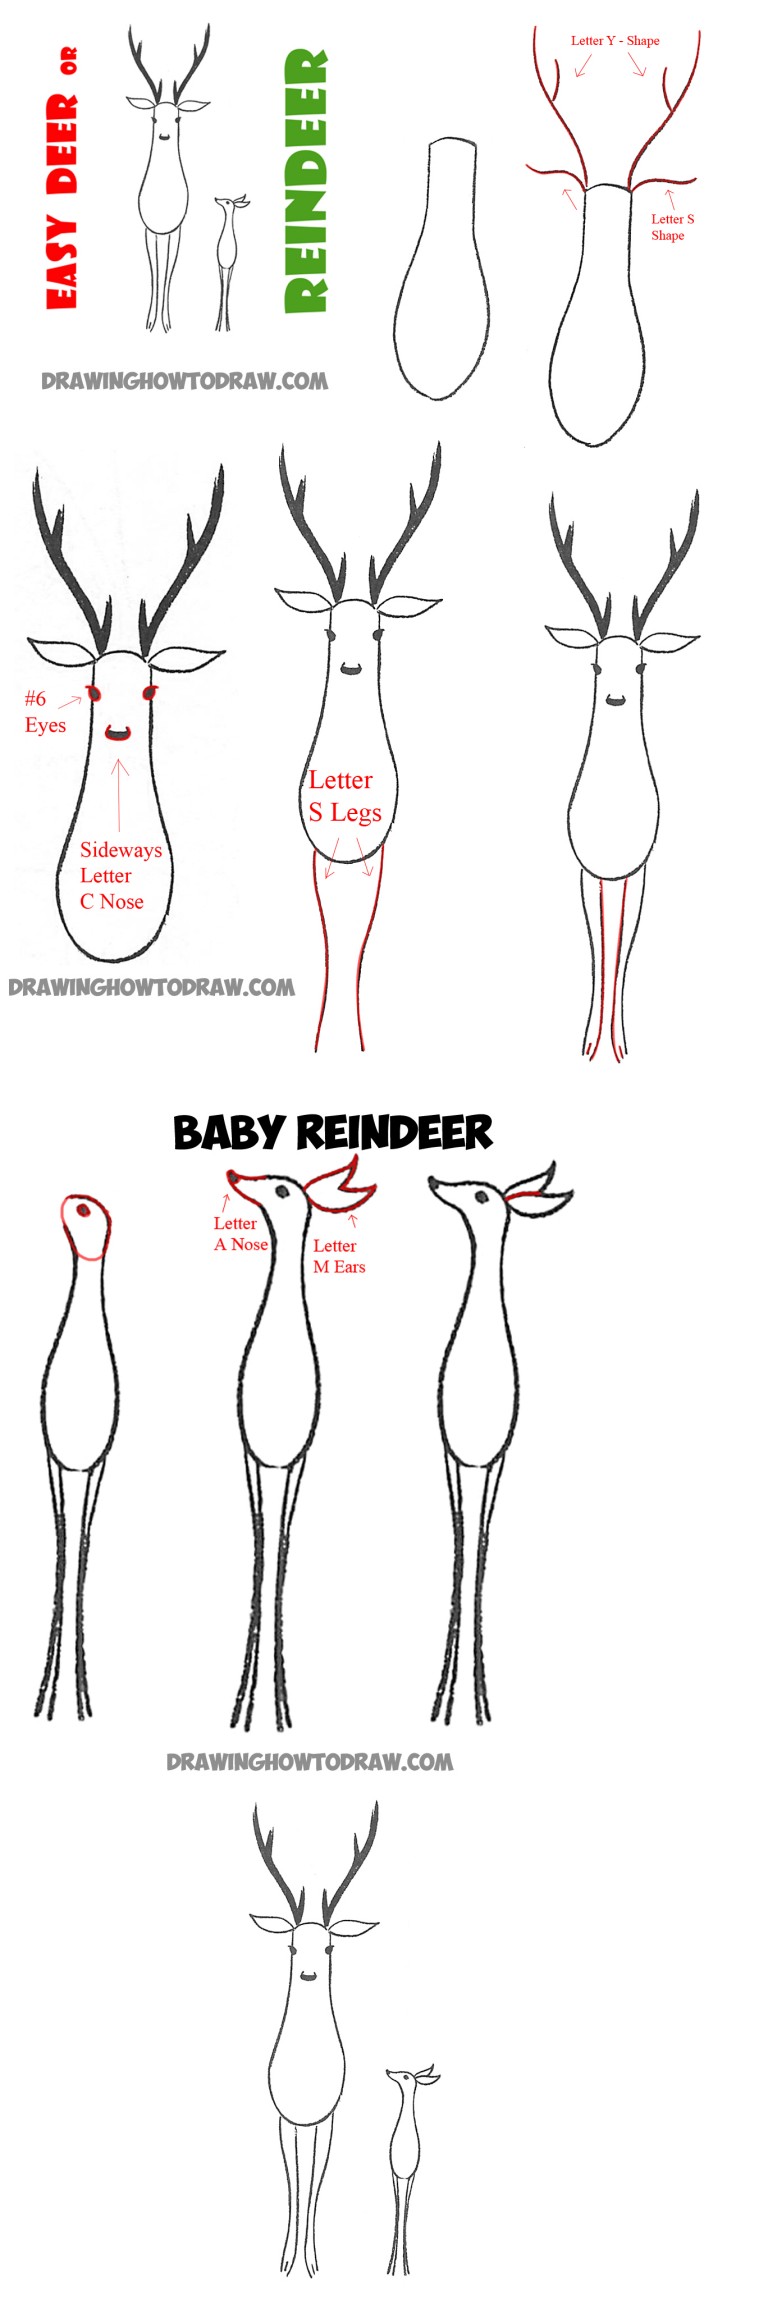 How to Draw Easy Reindeer or Deer for Preschoolers and Kids on